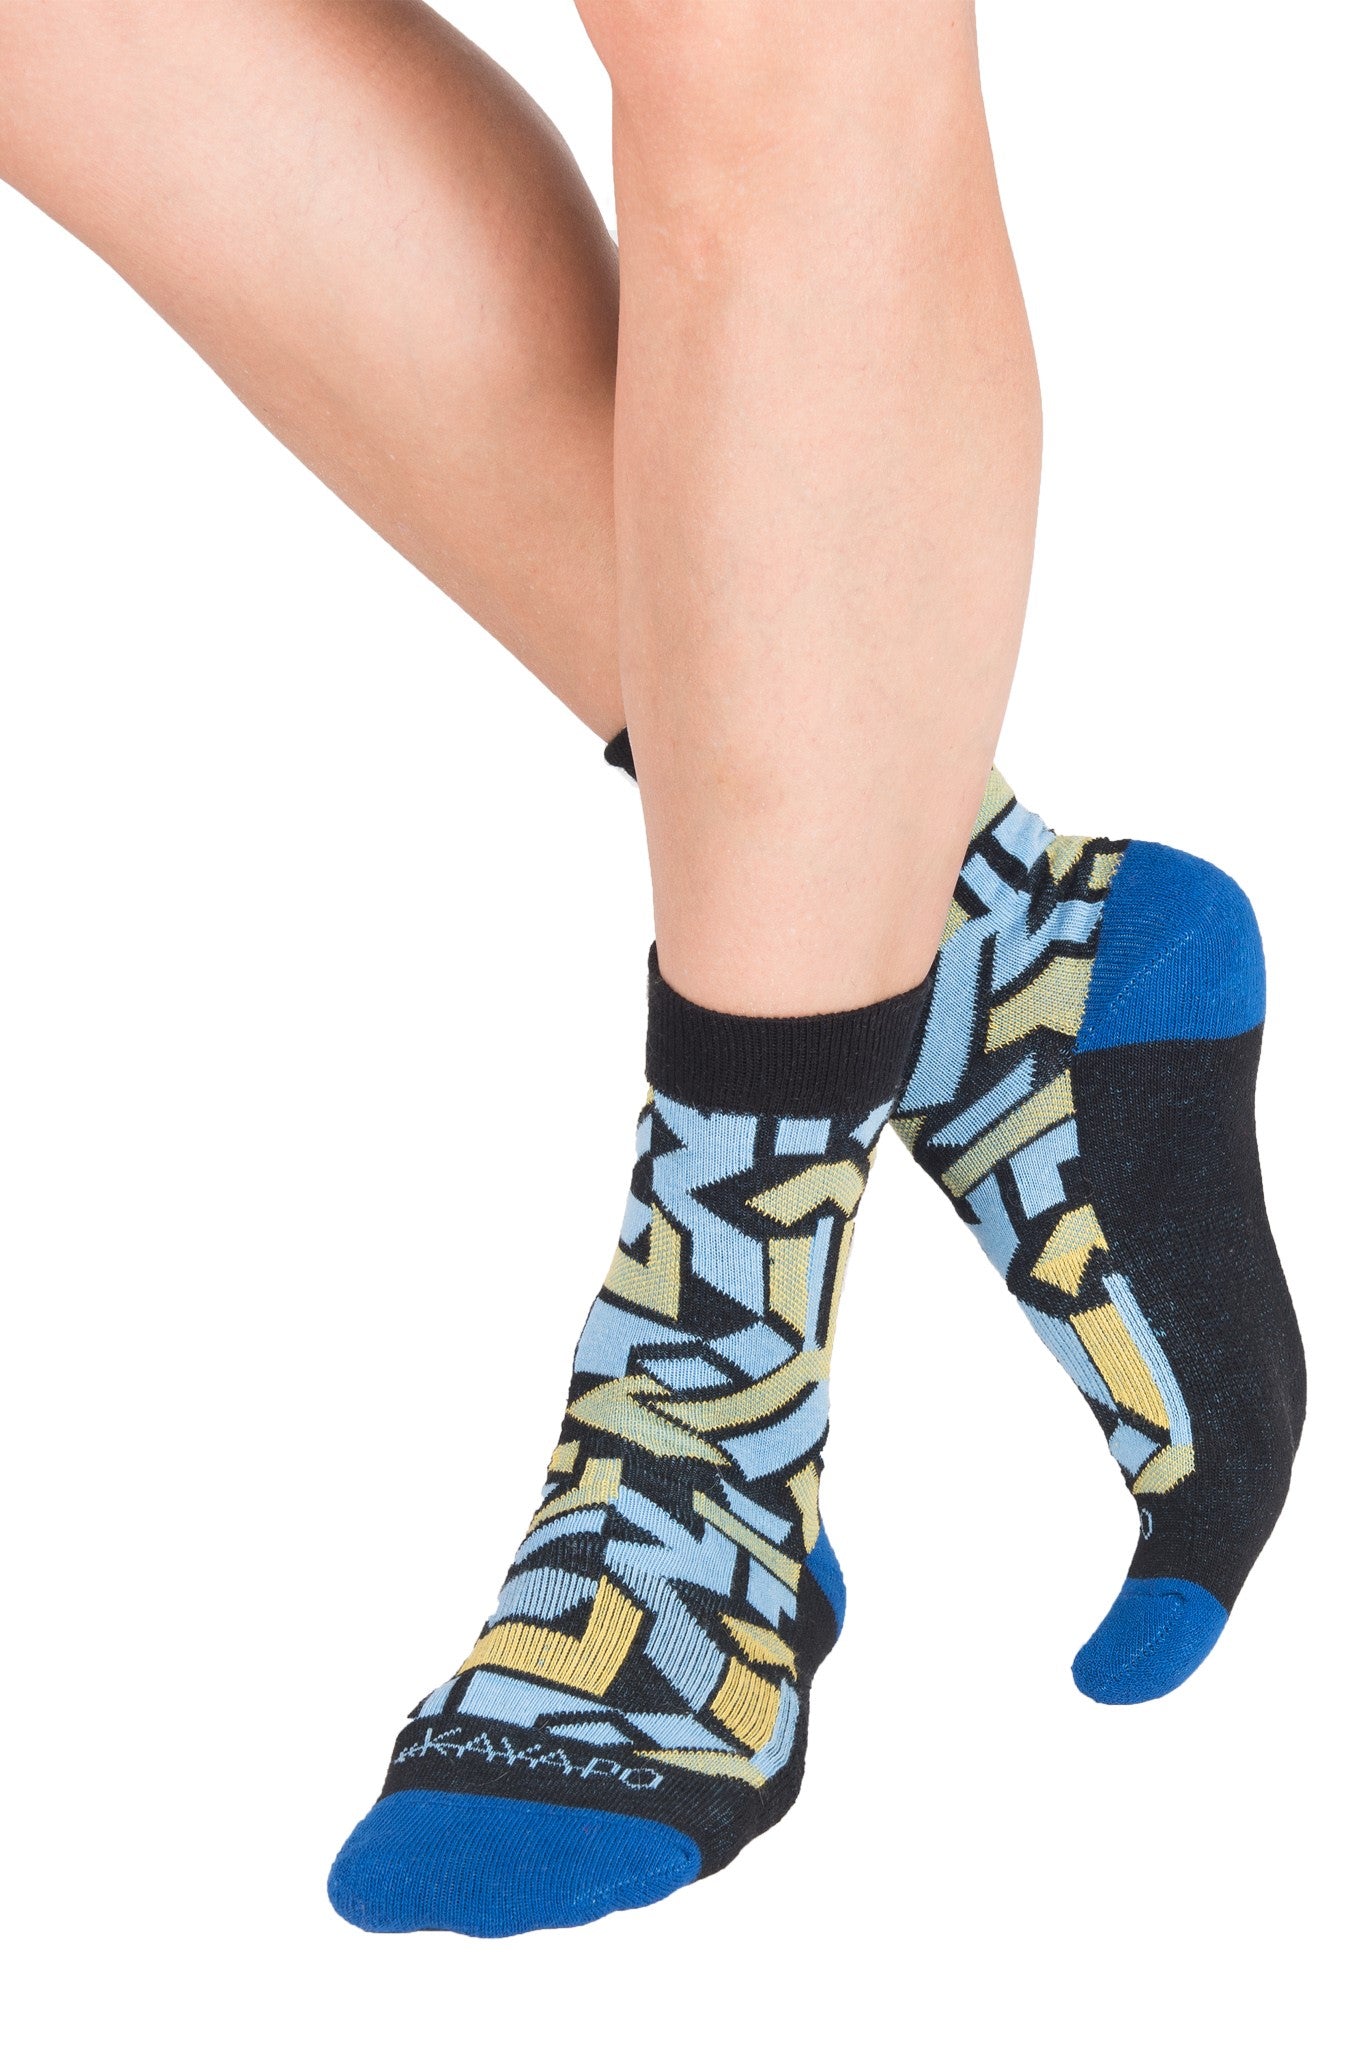 Kayapo Women's Crew Socks